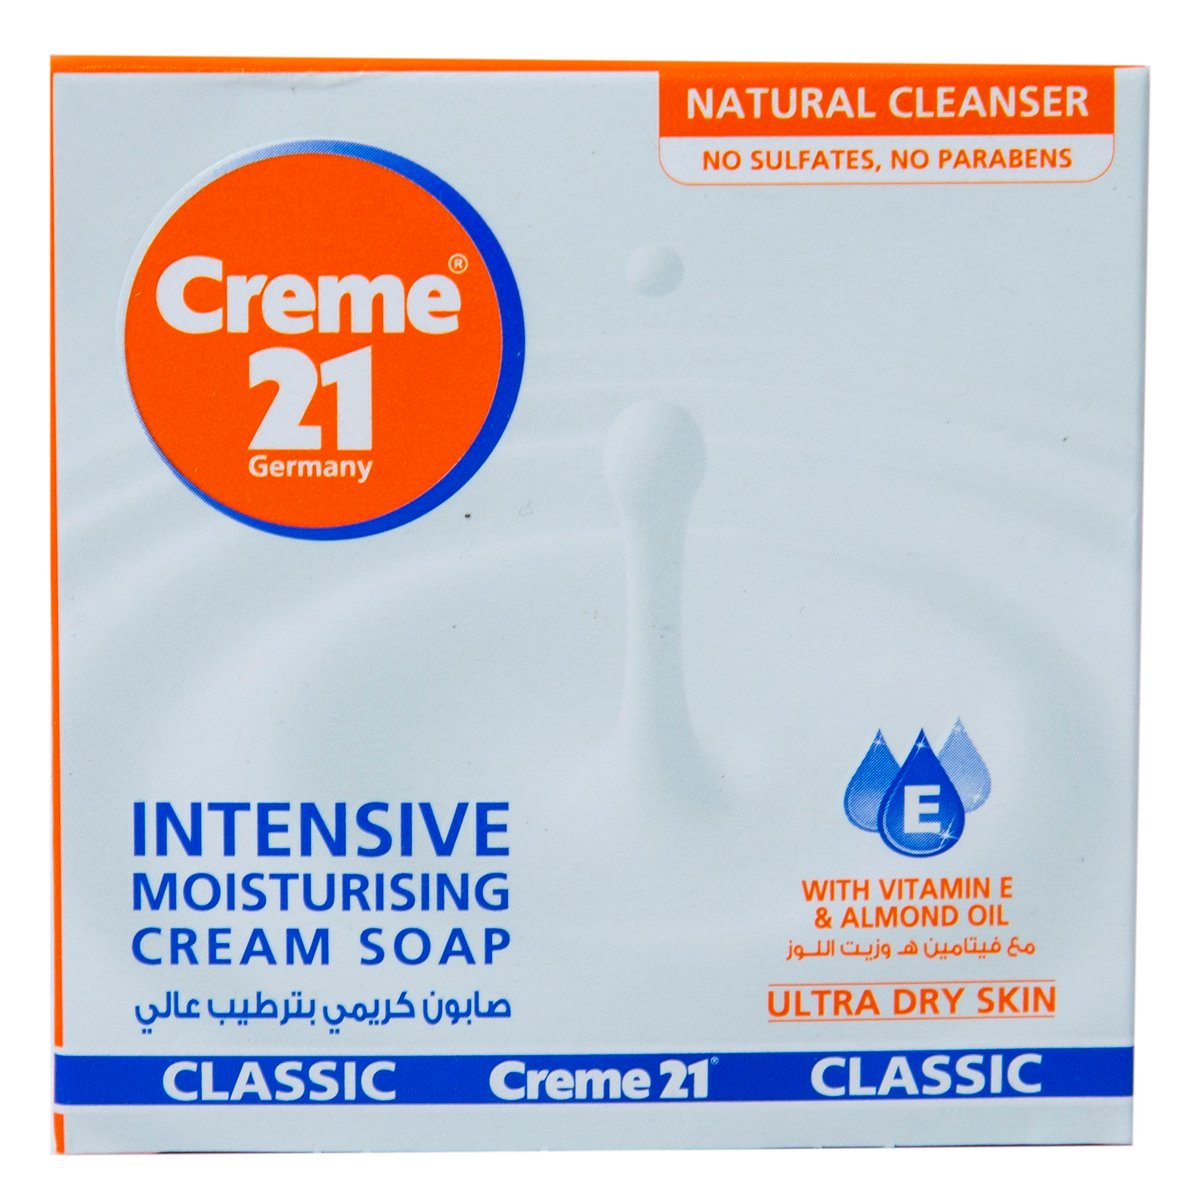 Creme 21 Intensive Moisturizing Cream Soap 125 g